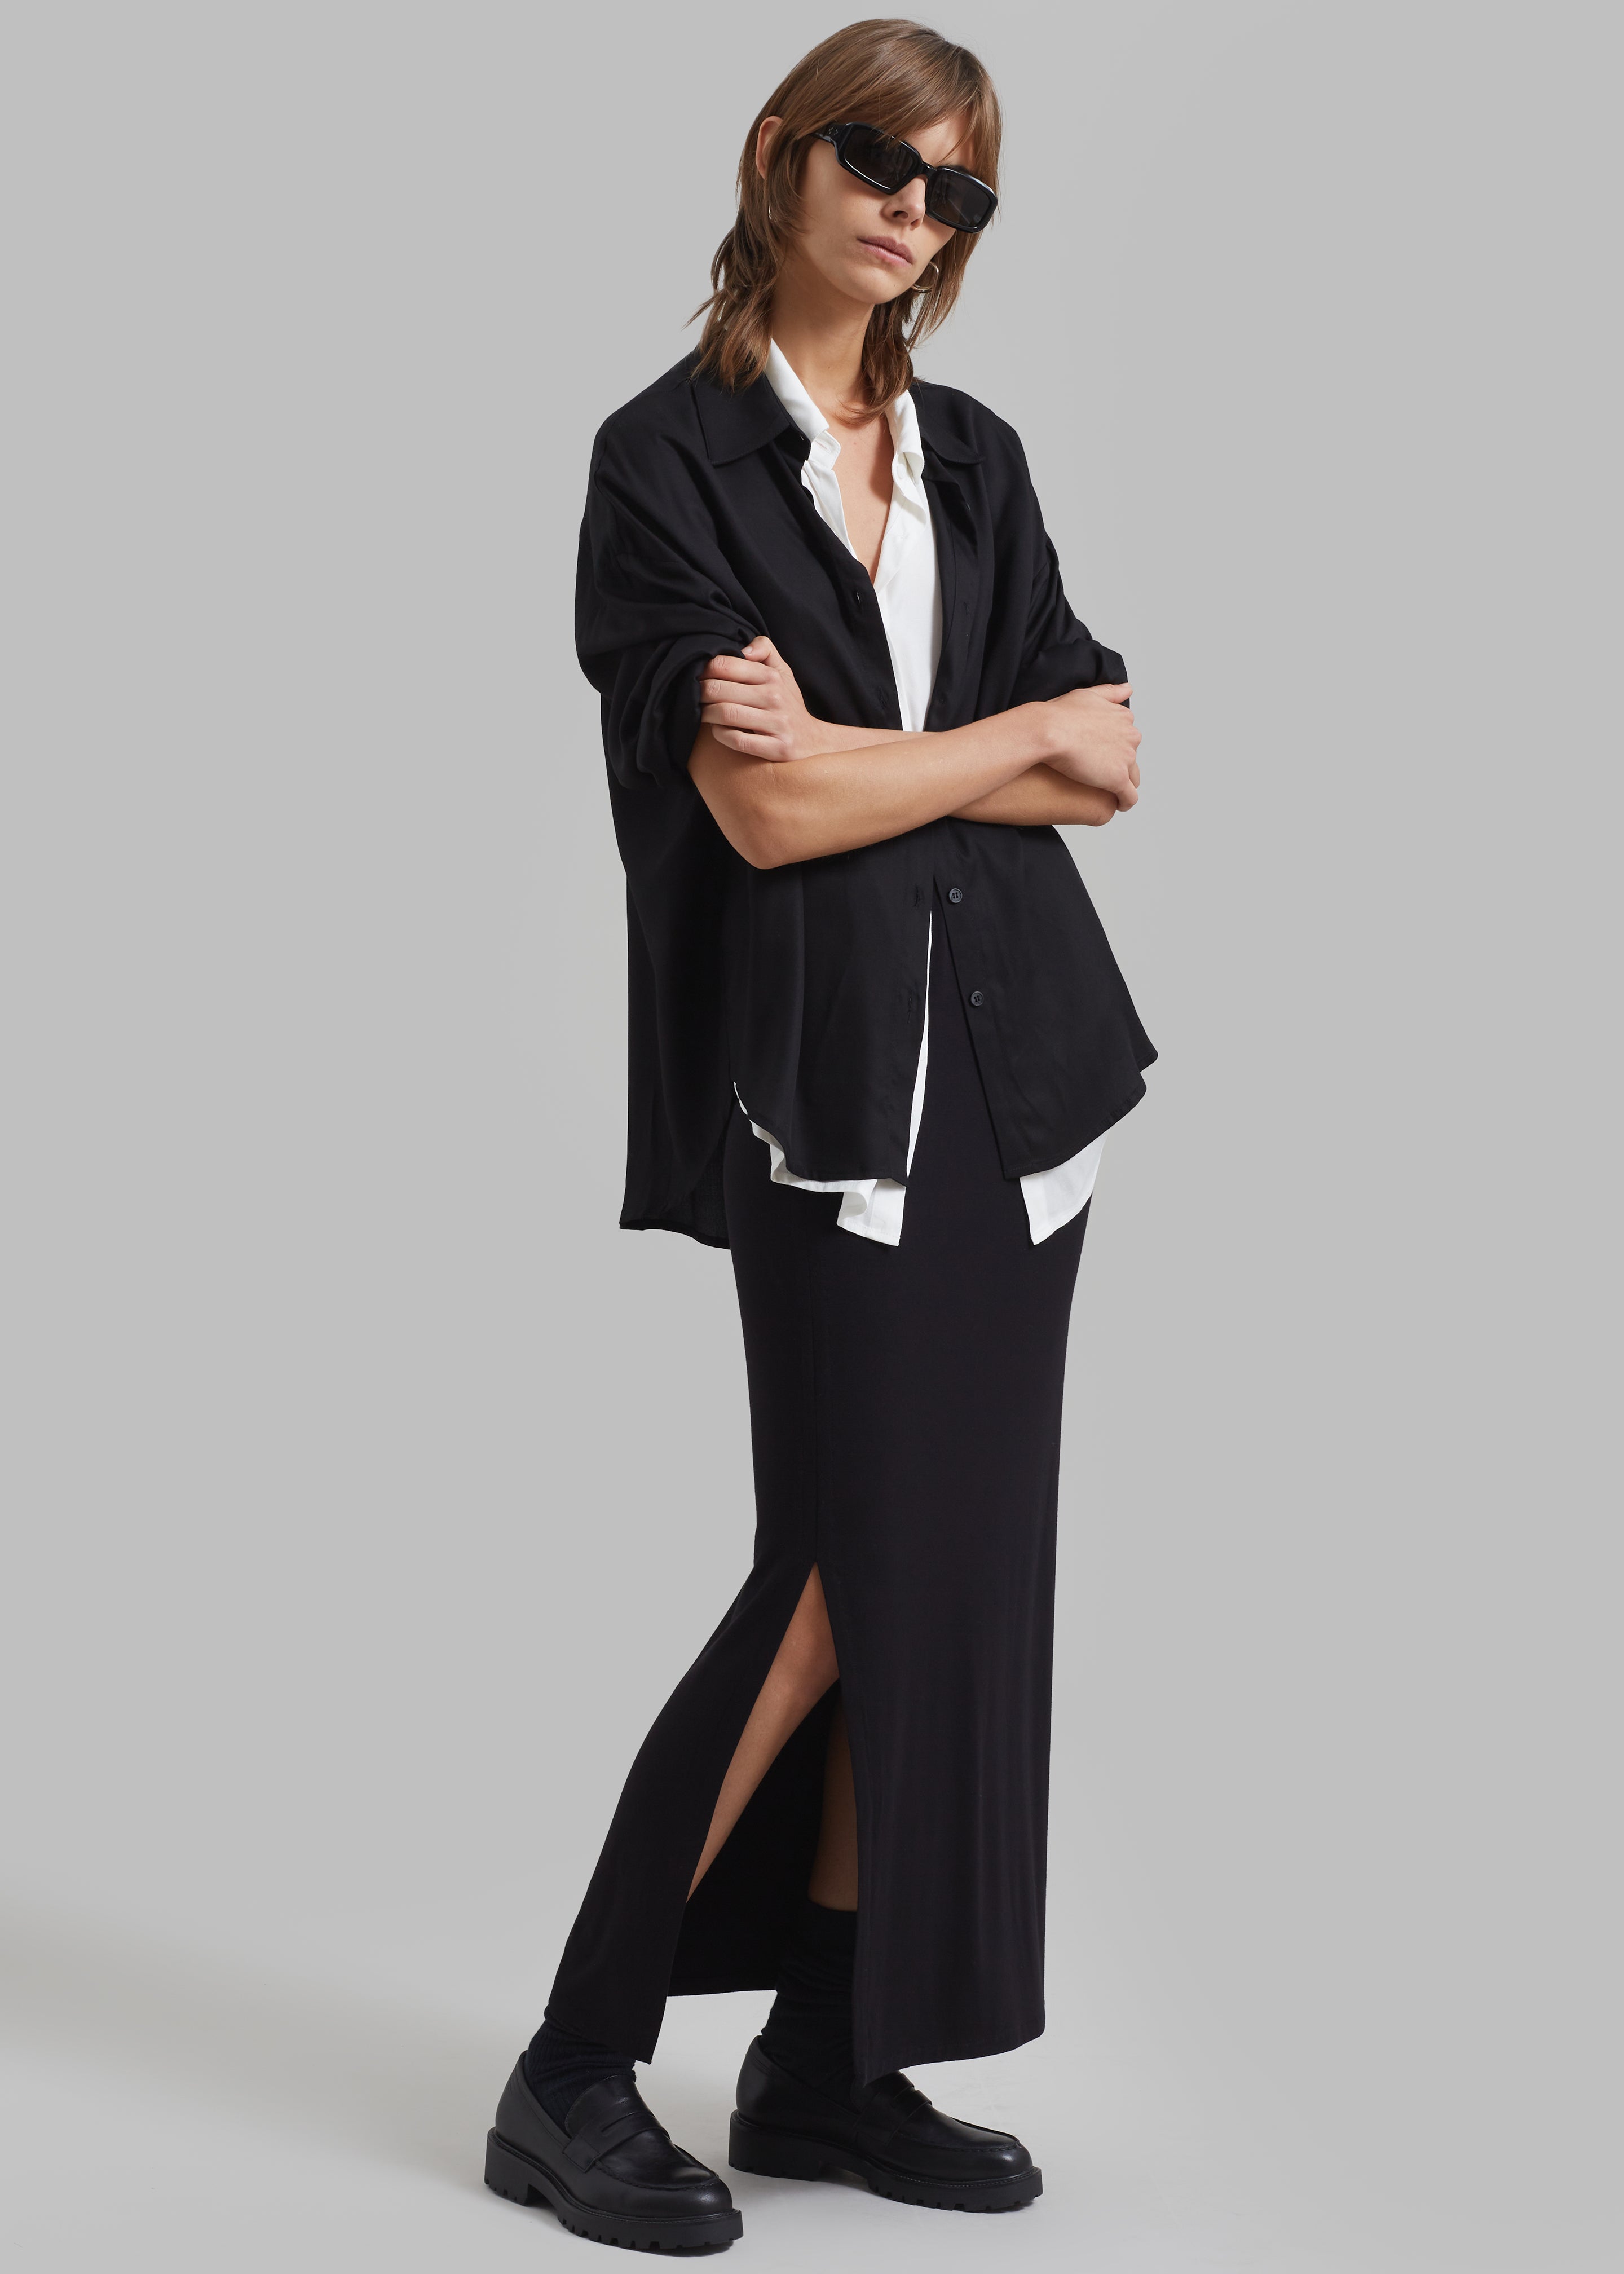 Ann Double Layer Shirt - Black/White - 4